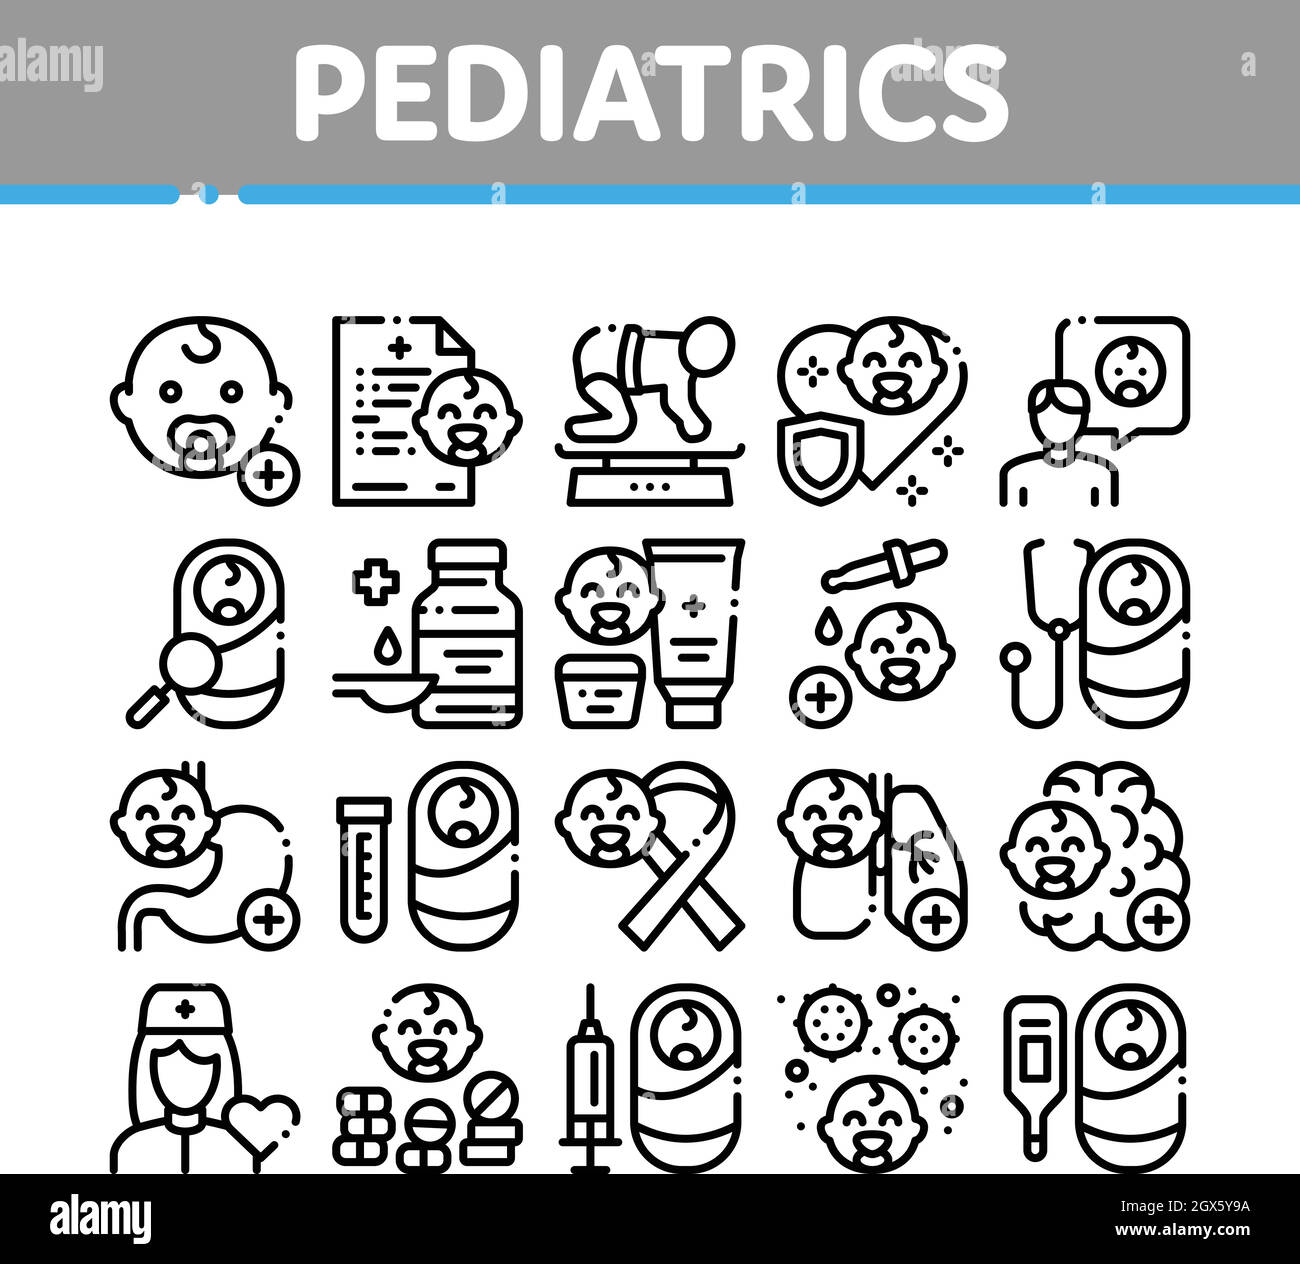 Pediatrics Medical Collection Icons Set Vector Stock Vector